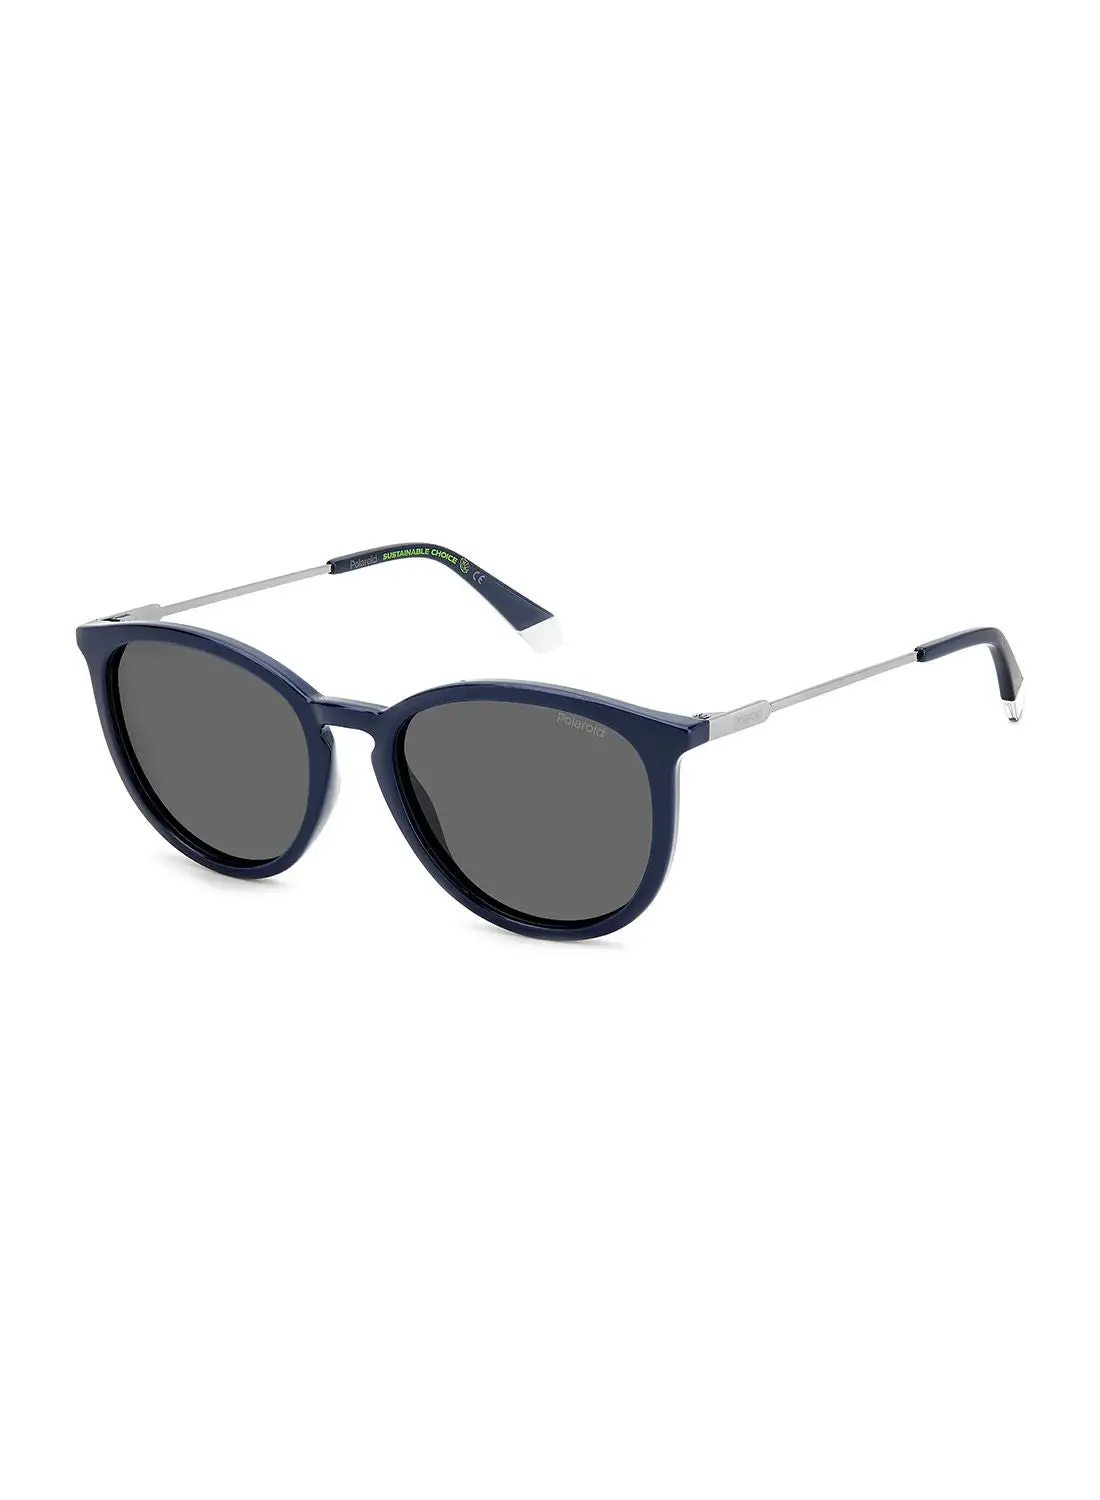 Polaroid Unisex UV Protection Round Sunglasses - Pld 4143/S/X Blue 53 - Lens Size: 53 Mm